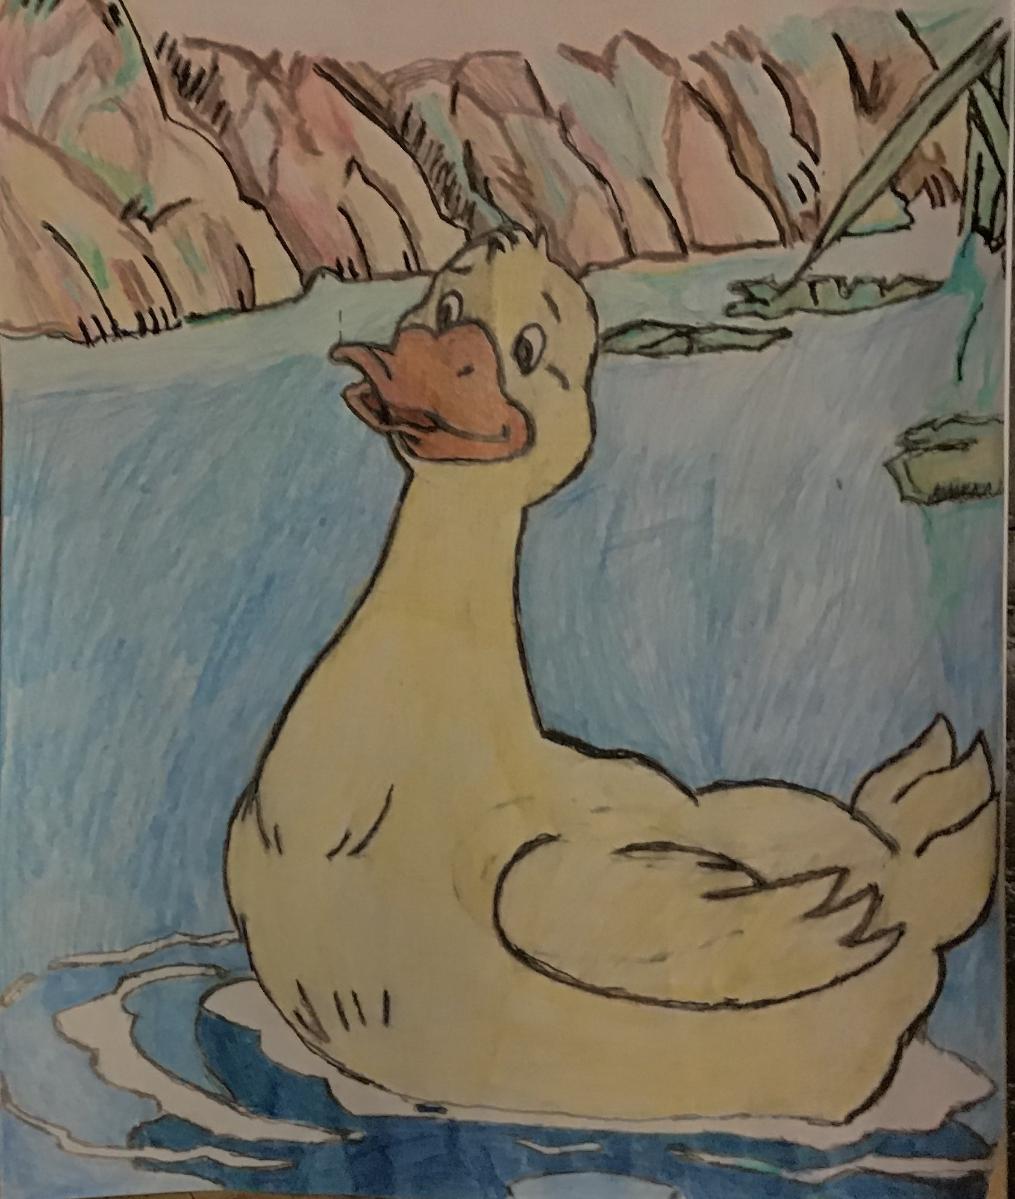 Duck Tracy Ryan GG – 8” x 11” Colored Pencil